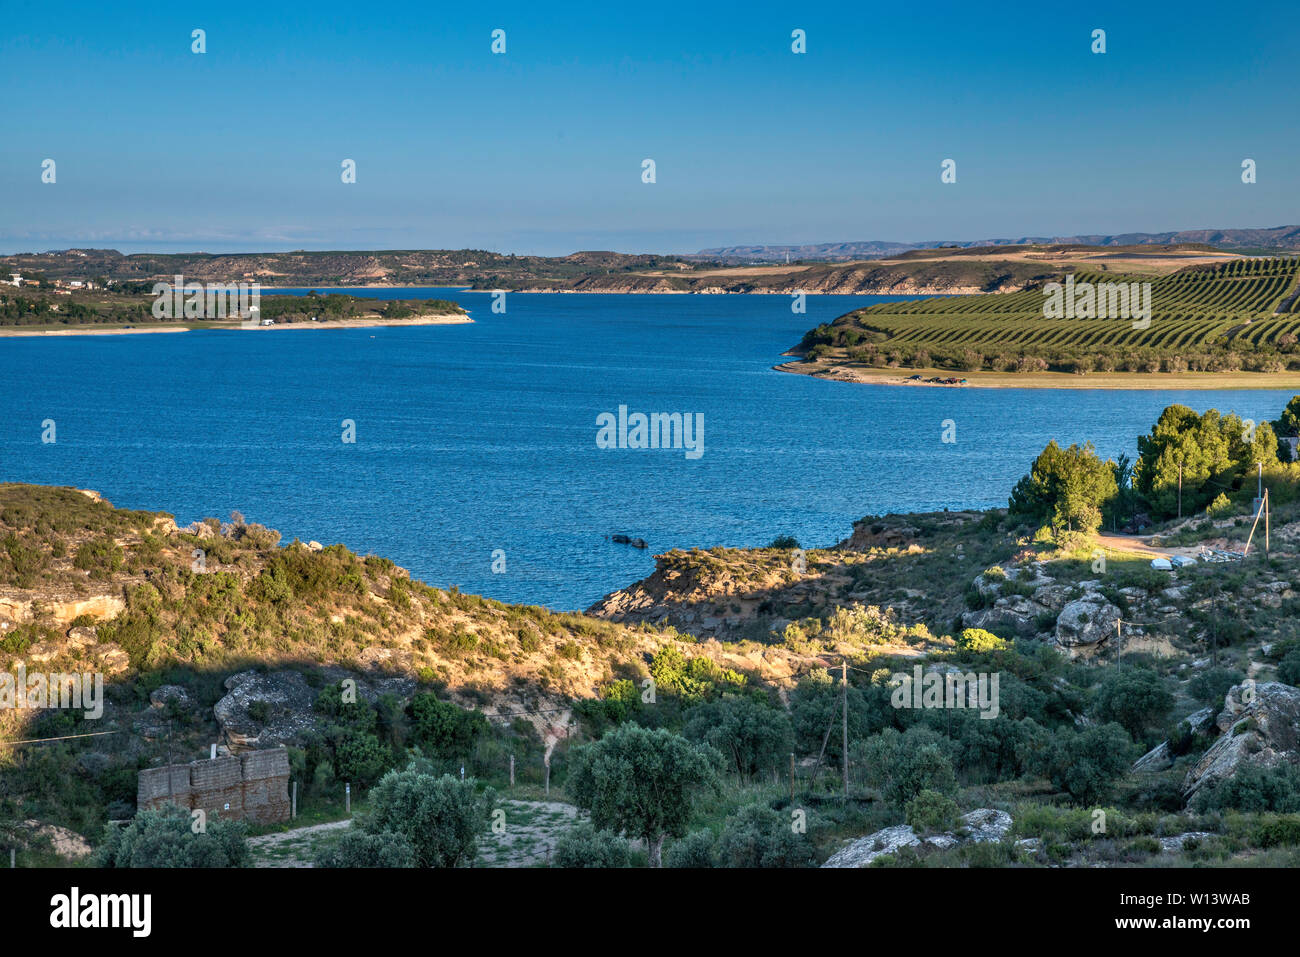 Embalse de Mequinenza (Mar de Aragón) reservoir on Ebro river near town of Ebro, Zaragoza province, Aragon, Spain Stock Photo